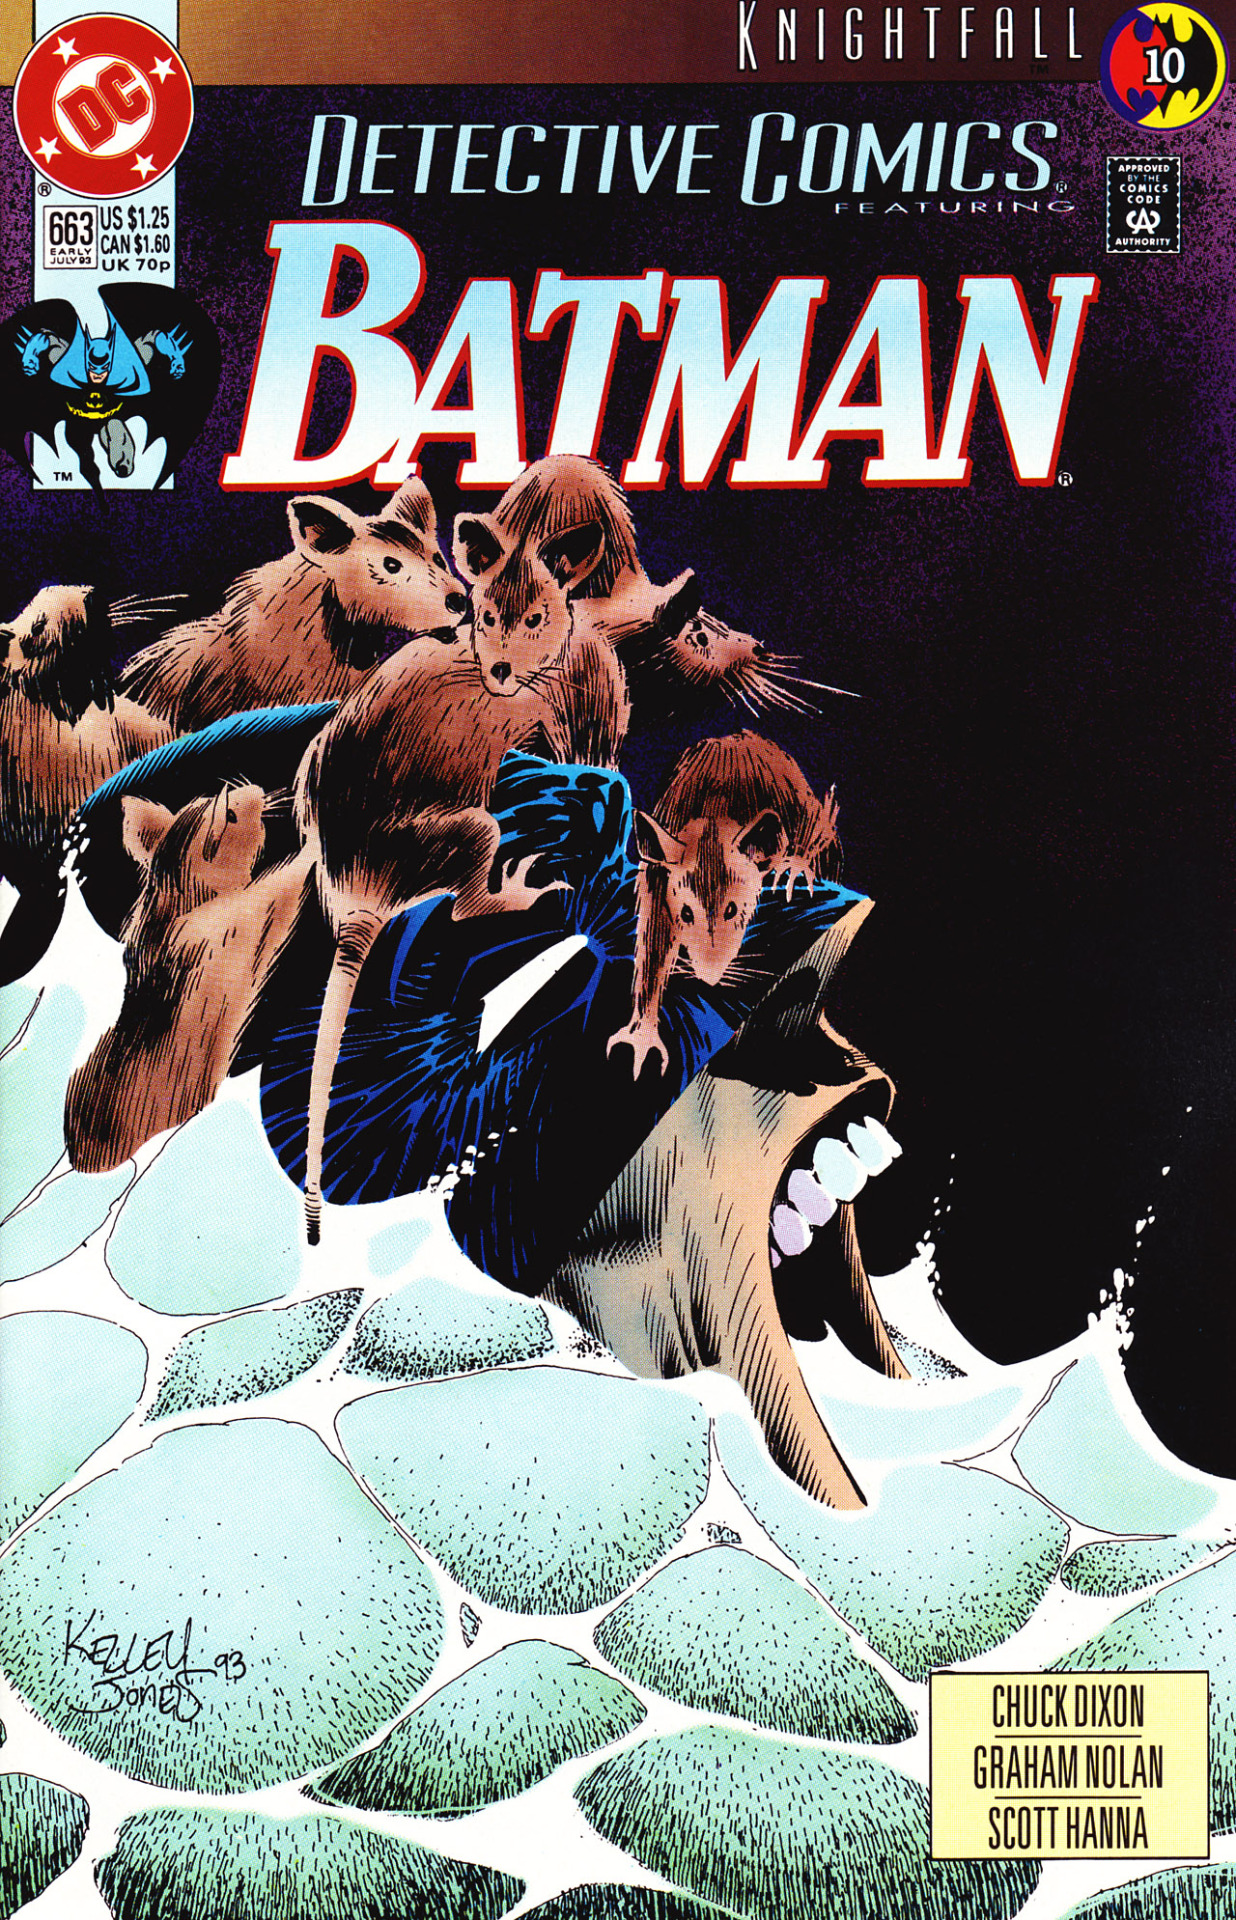 GNARLY COVERS — Detective Comics #663 (DC Comics - July 1993) ...